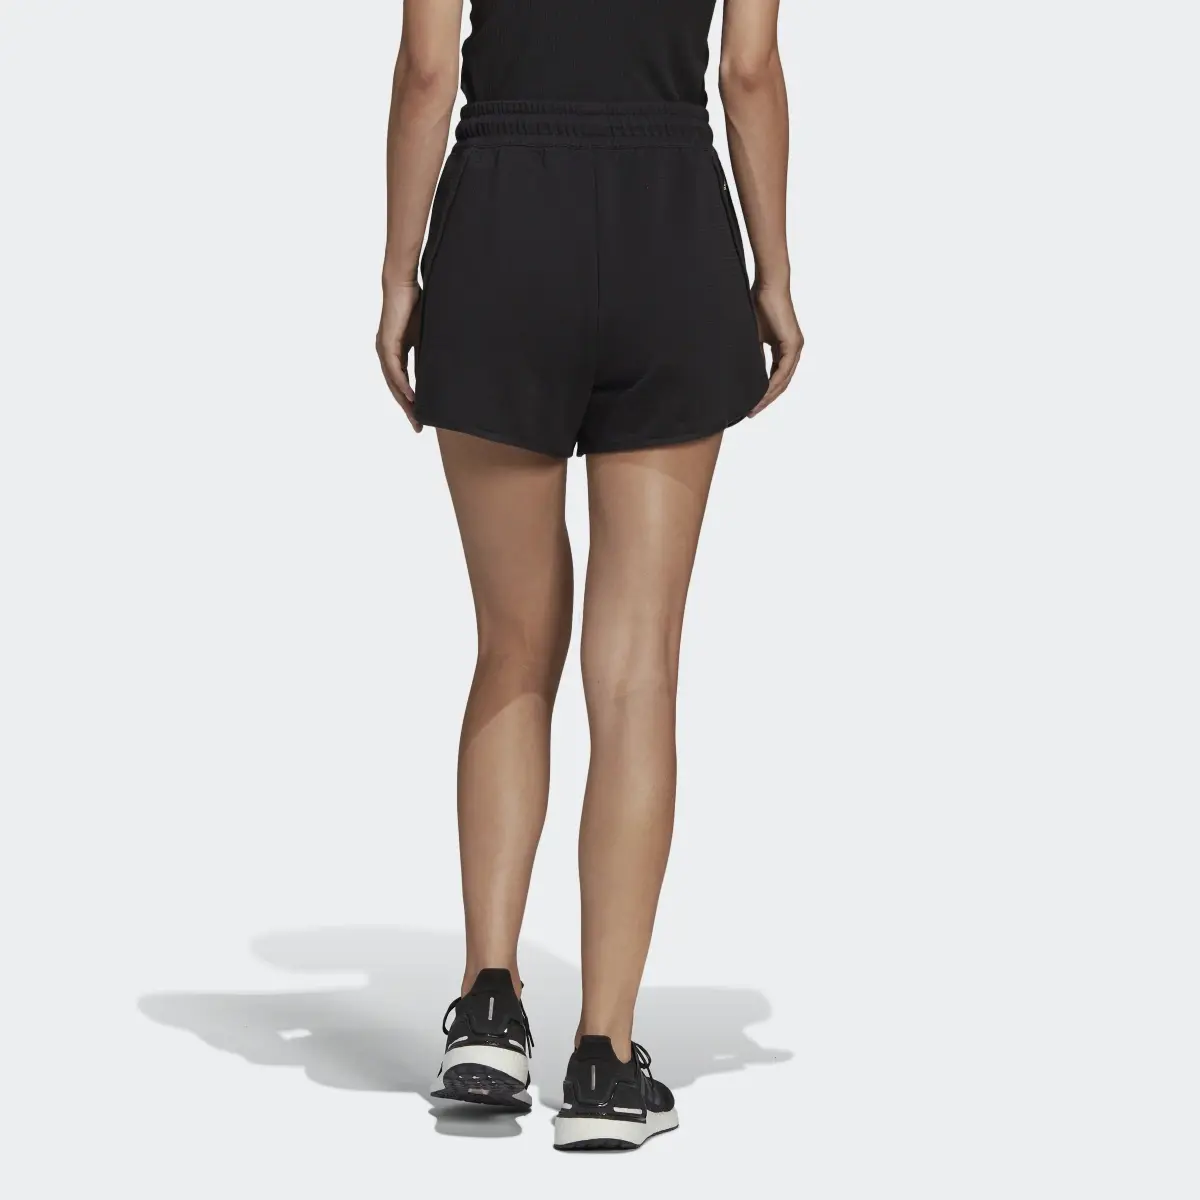 Adidas x Karlie Kloss Shorts. 2